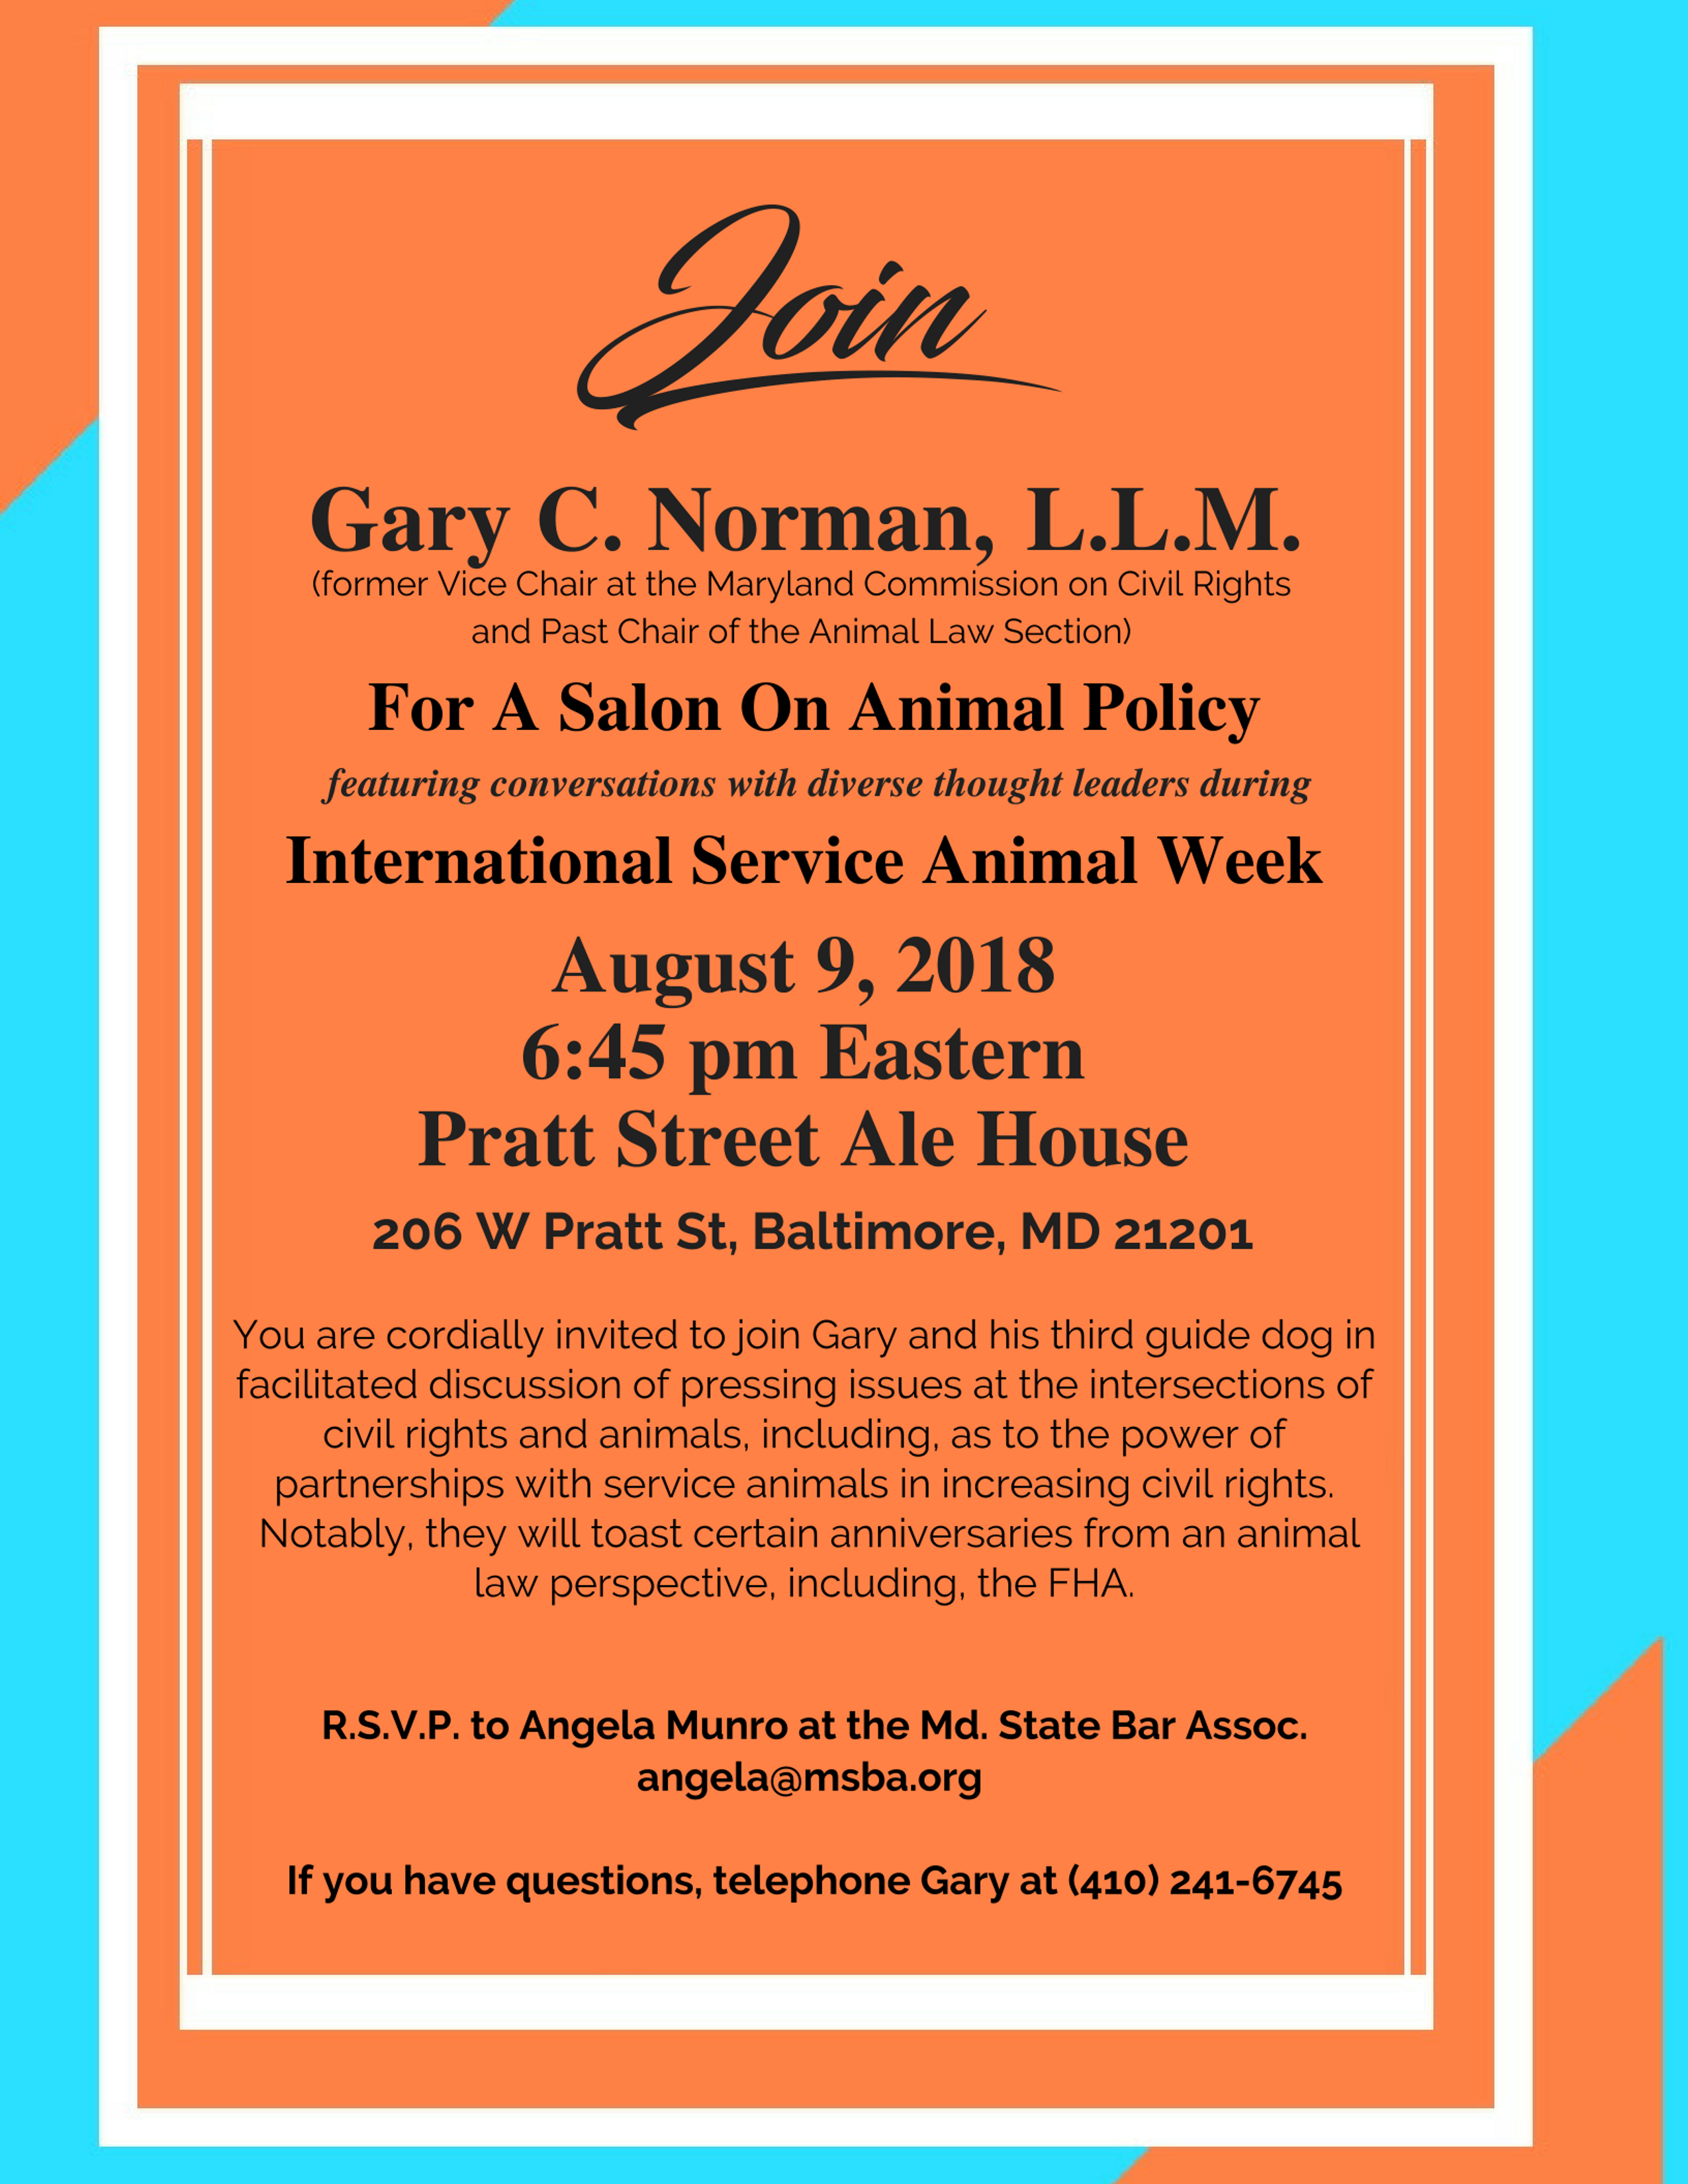 Animal Policy Salon with Gary C Norman, ADR, International Service Animal Week,